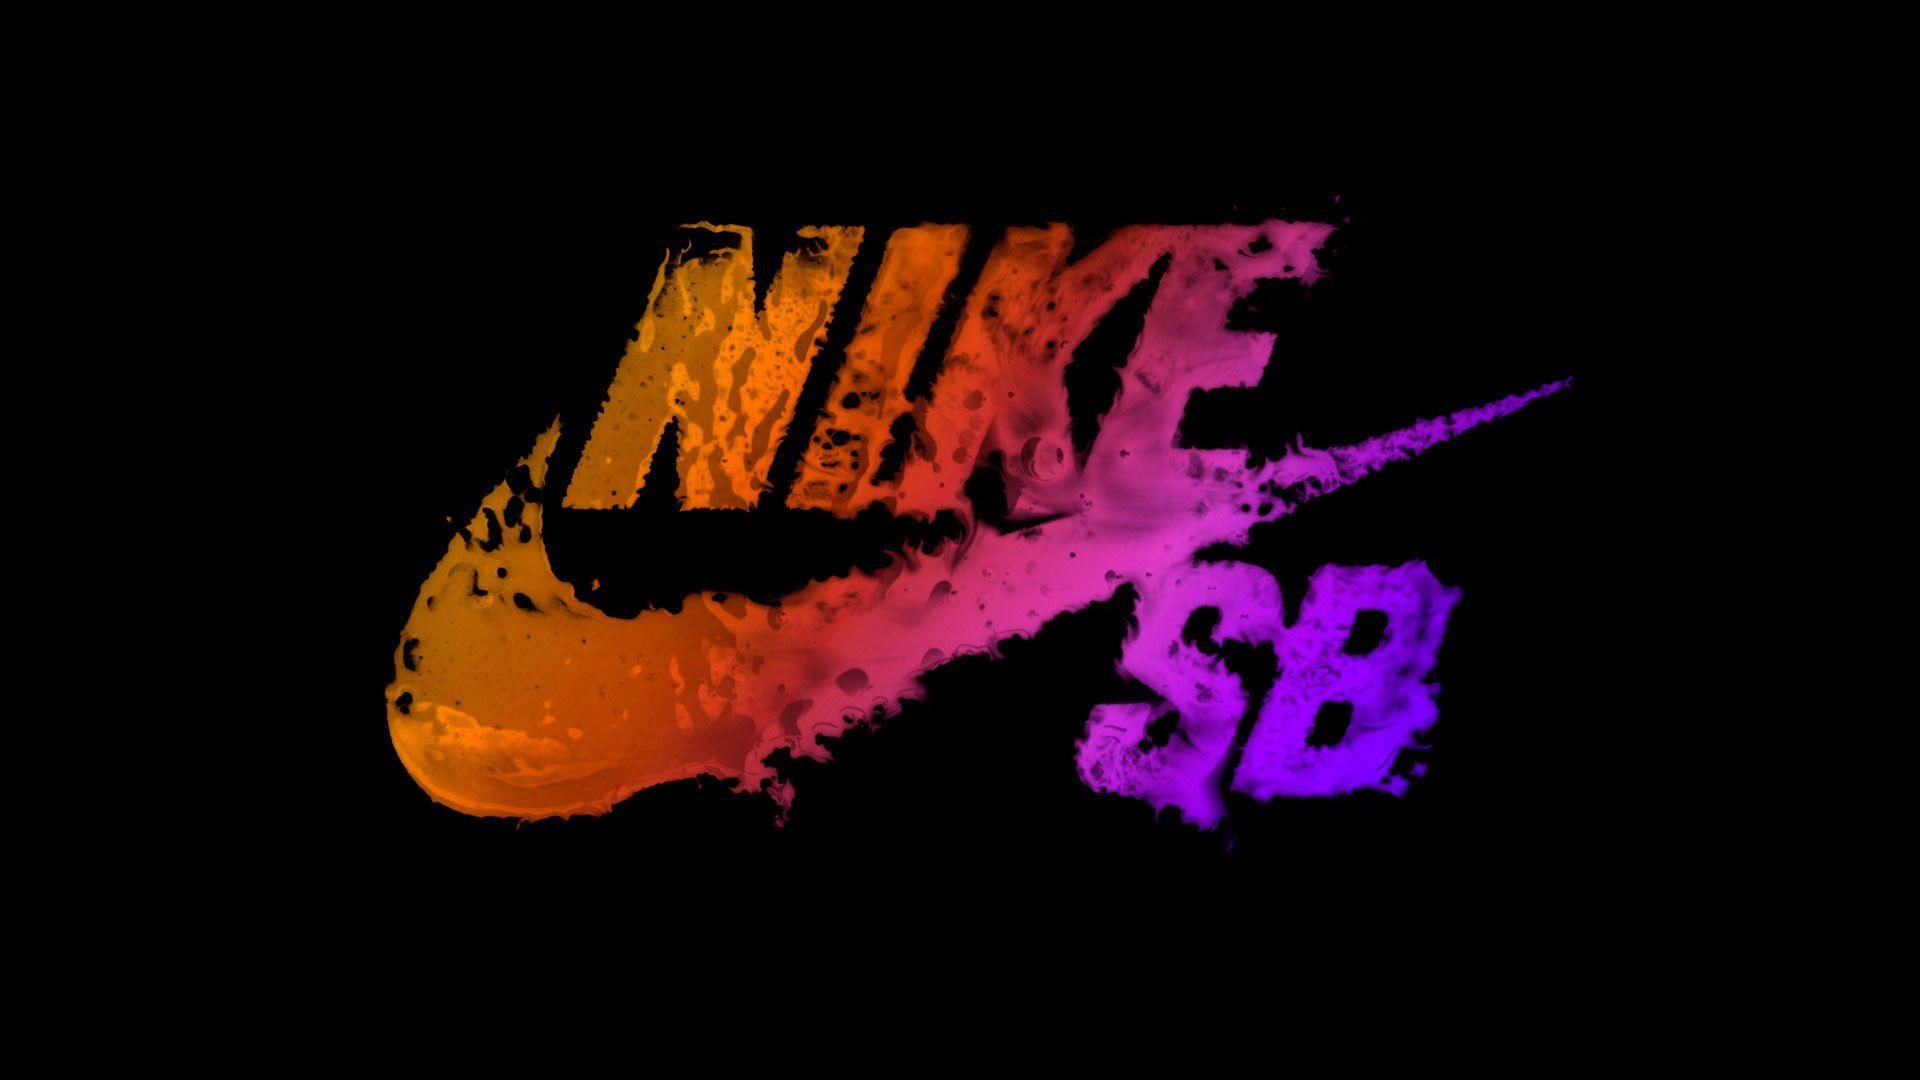 Nike Sb Wallpaper